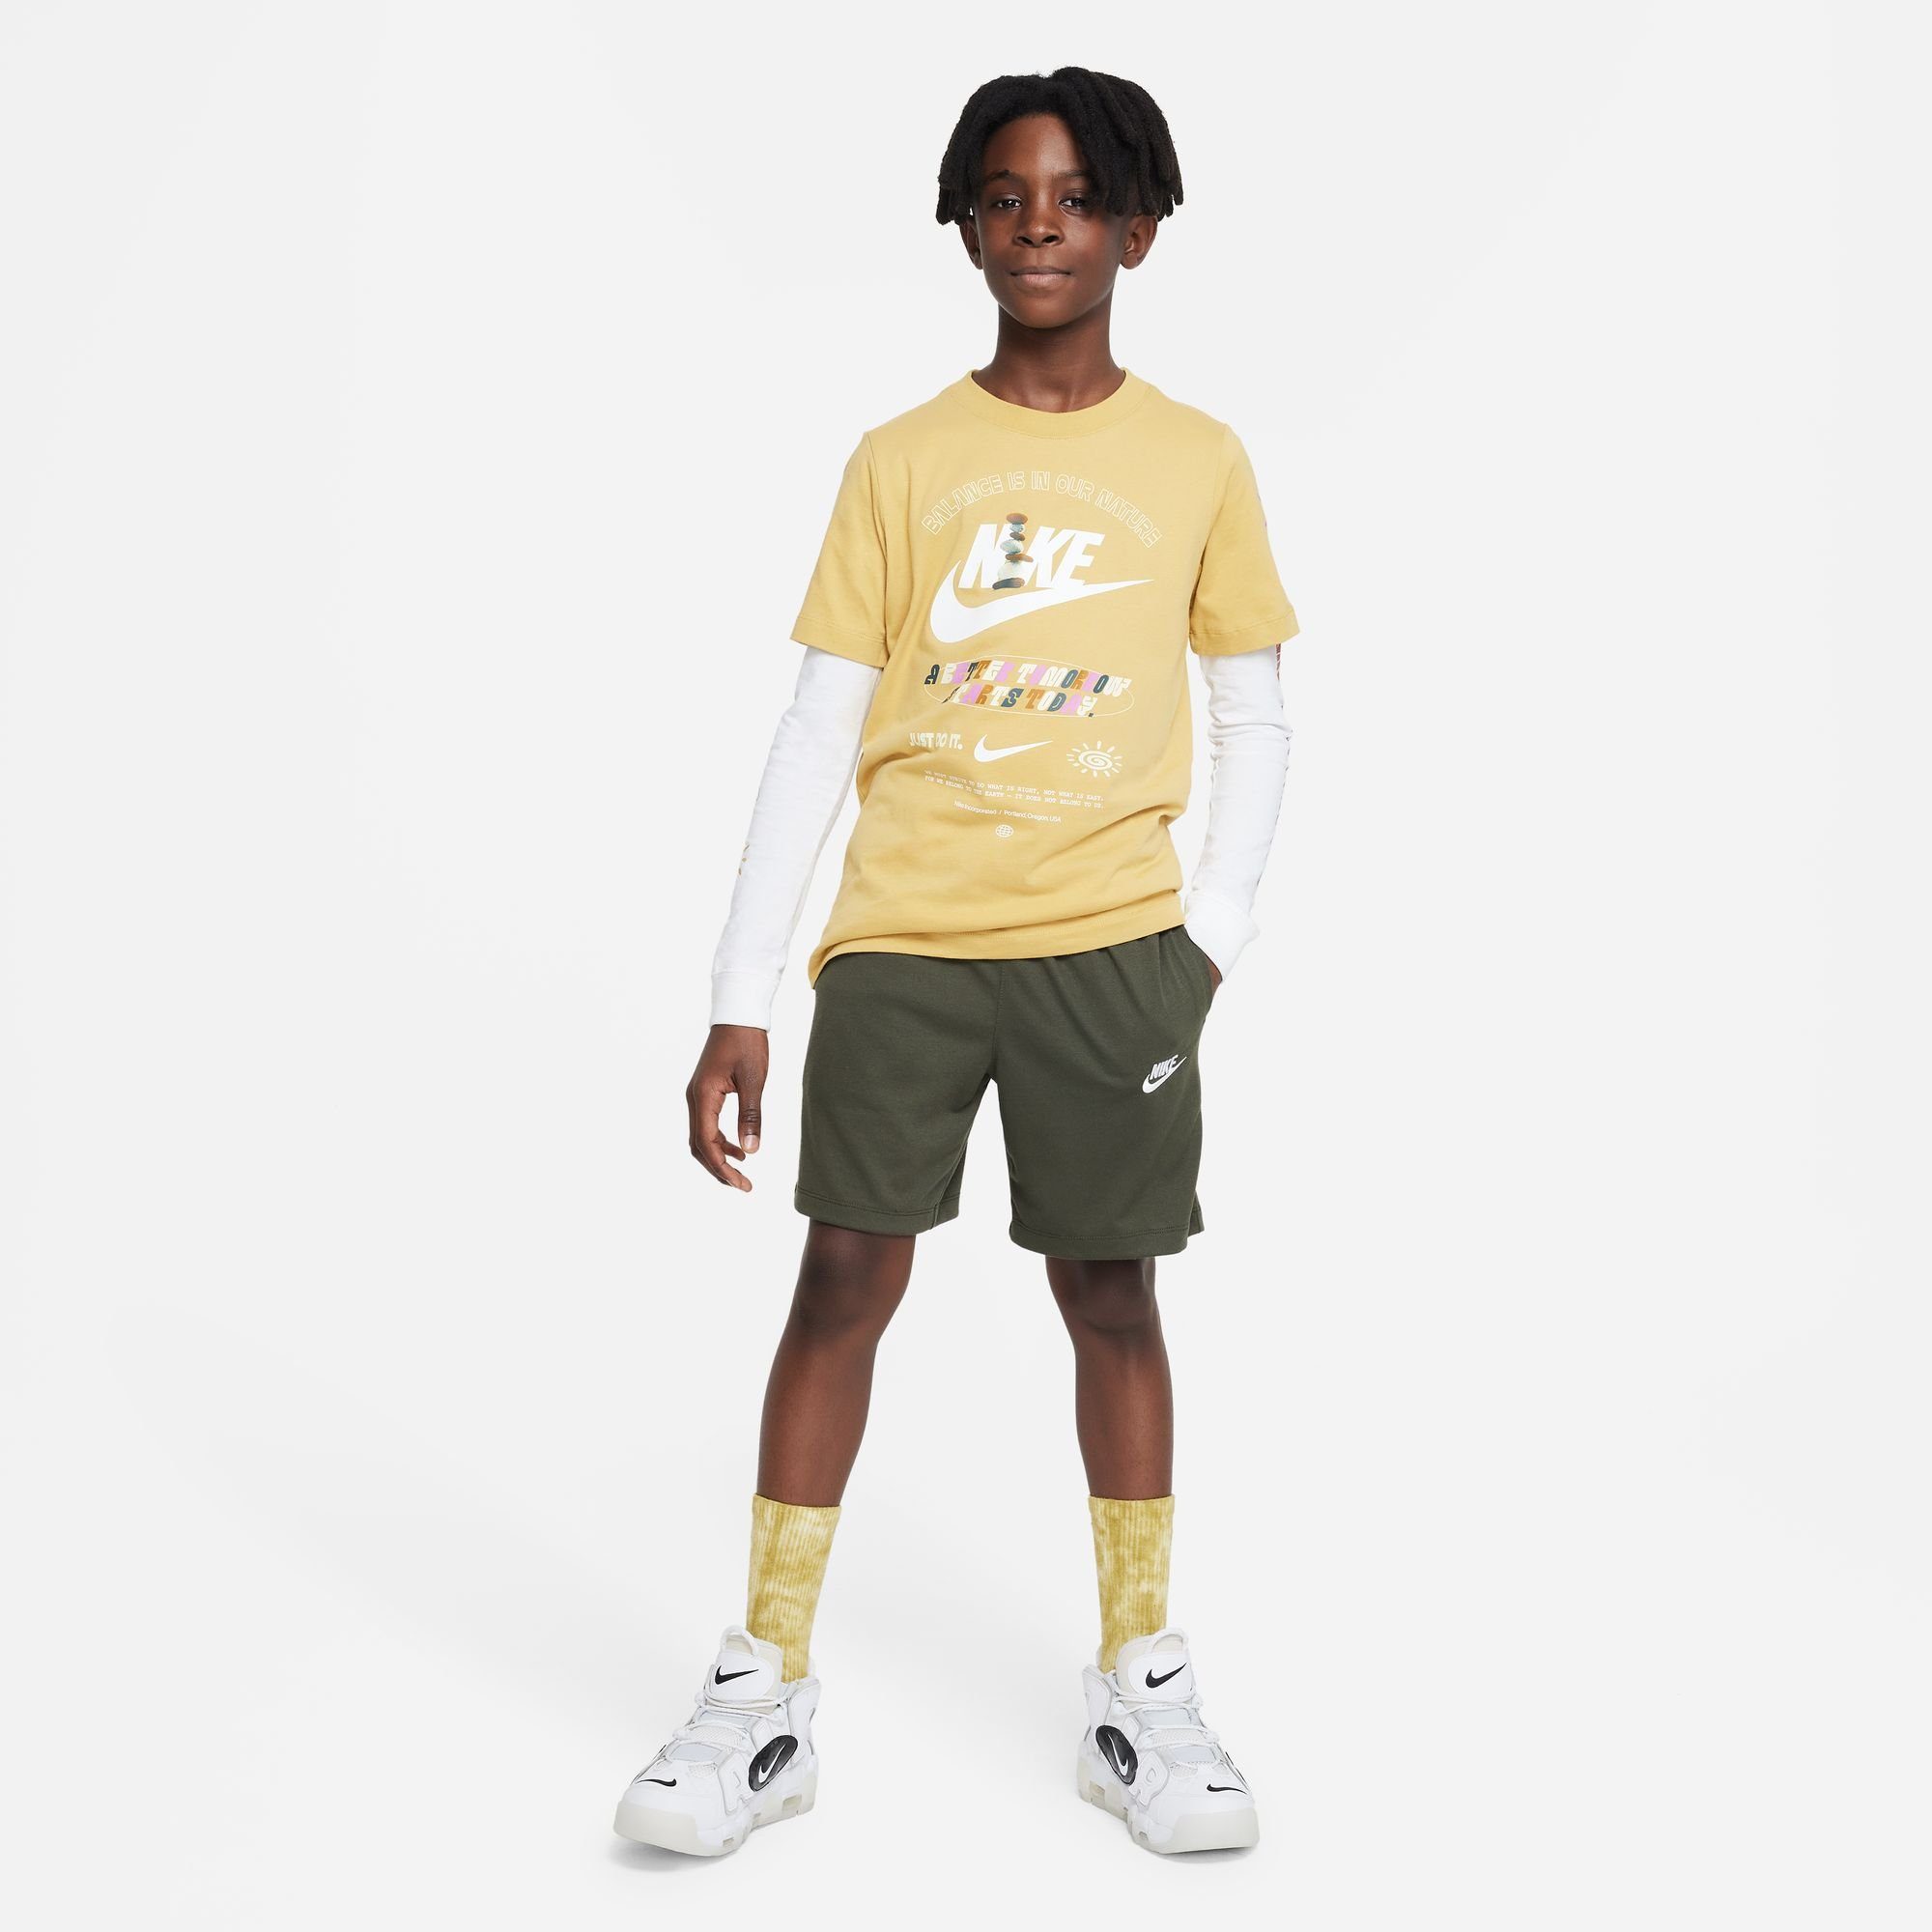 JERSEY CARGO Sportswear BIG SHORTS KIDS' Nike Shorts KHAKI/WHITE (BOYS)